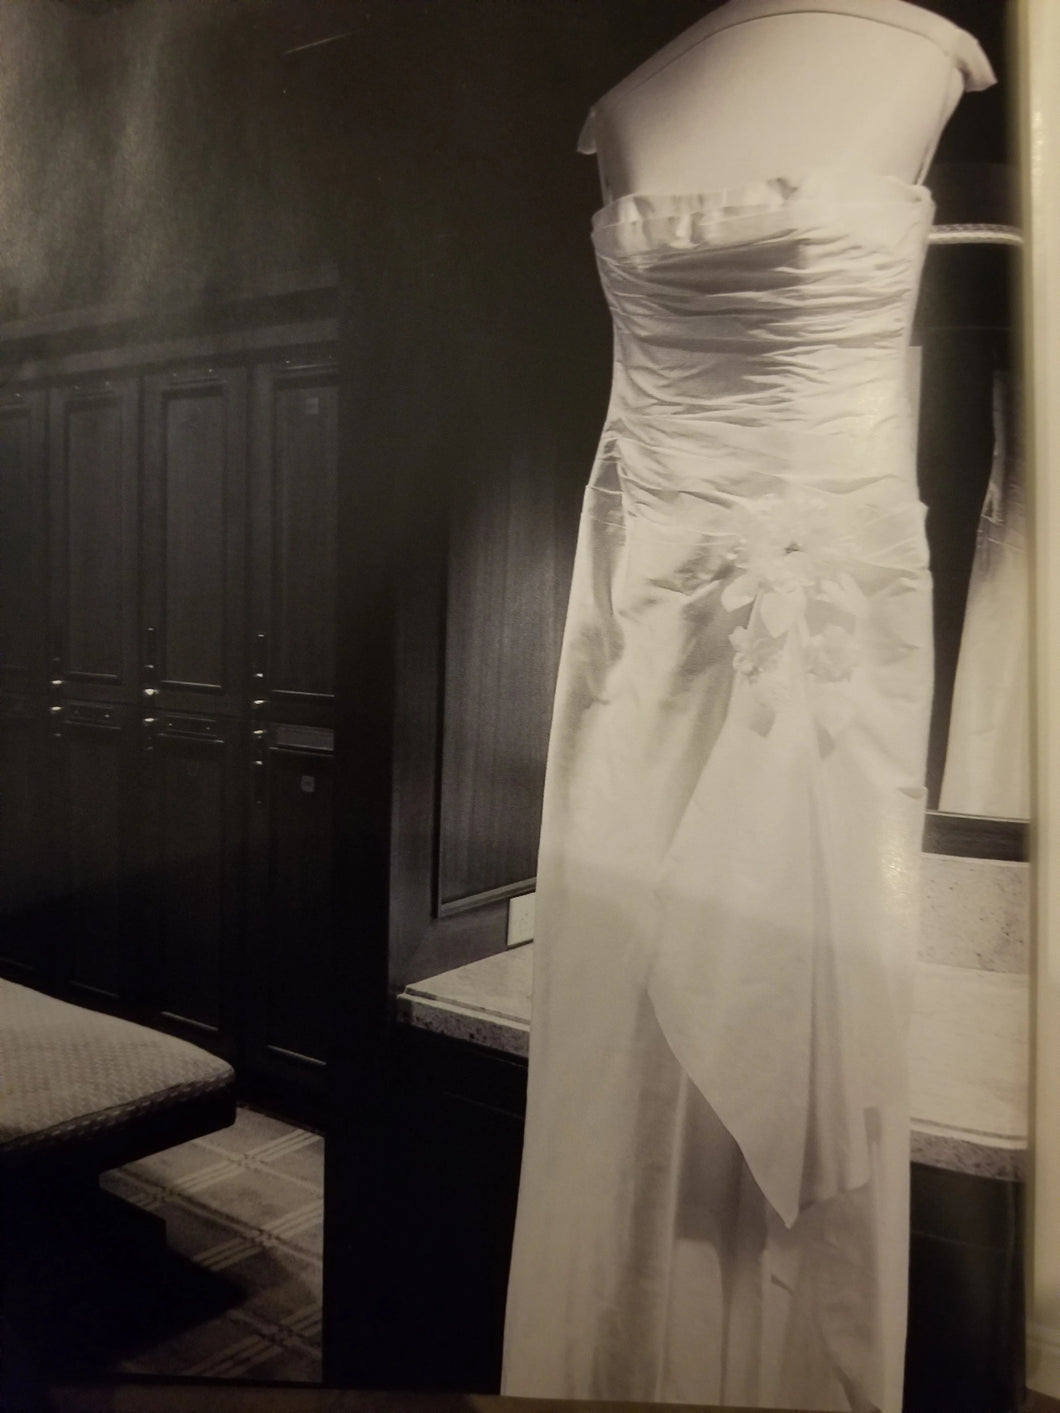 Cymbeline Paris 'Cymbeline' size 6 used wedding dress front view on hanger